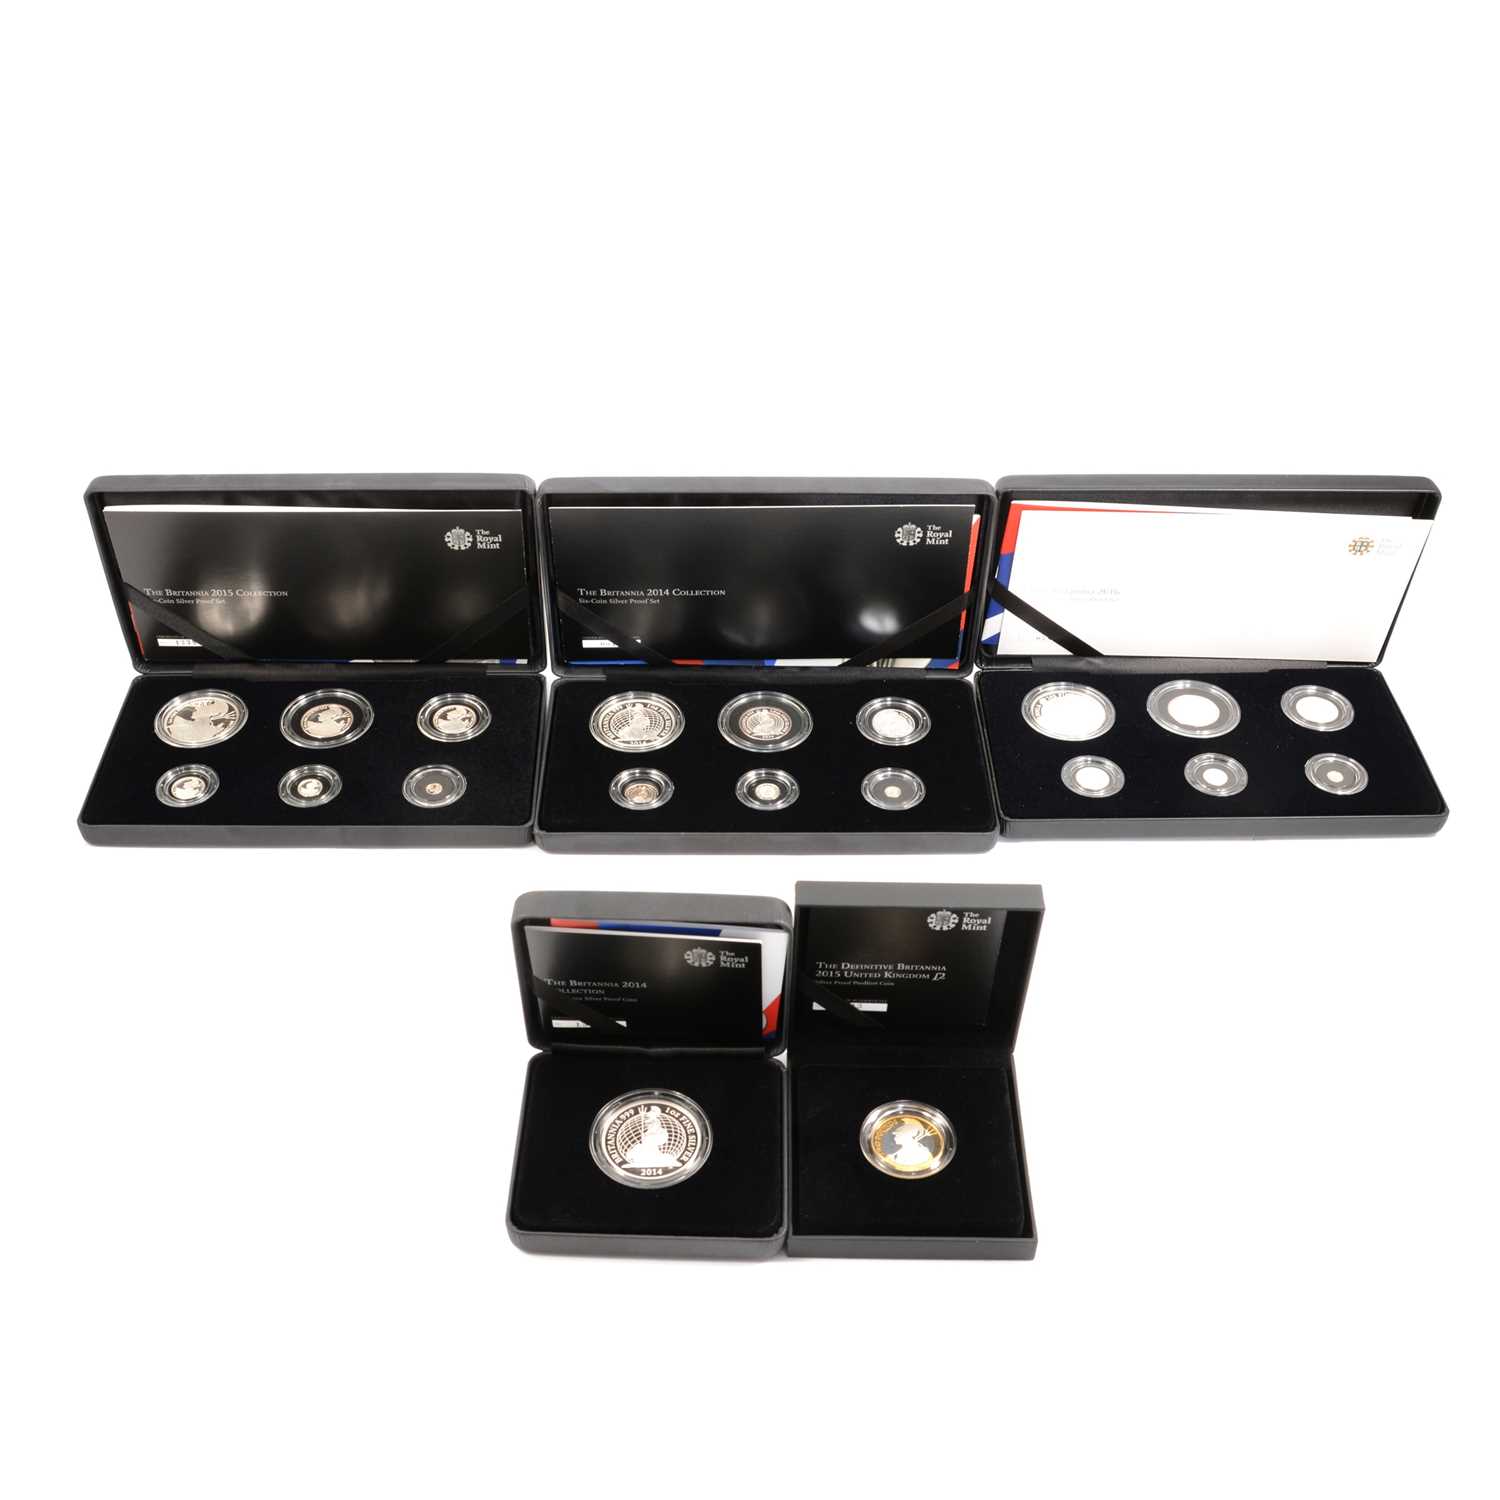 Five Royal Mint commemorative coin sets